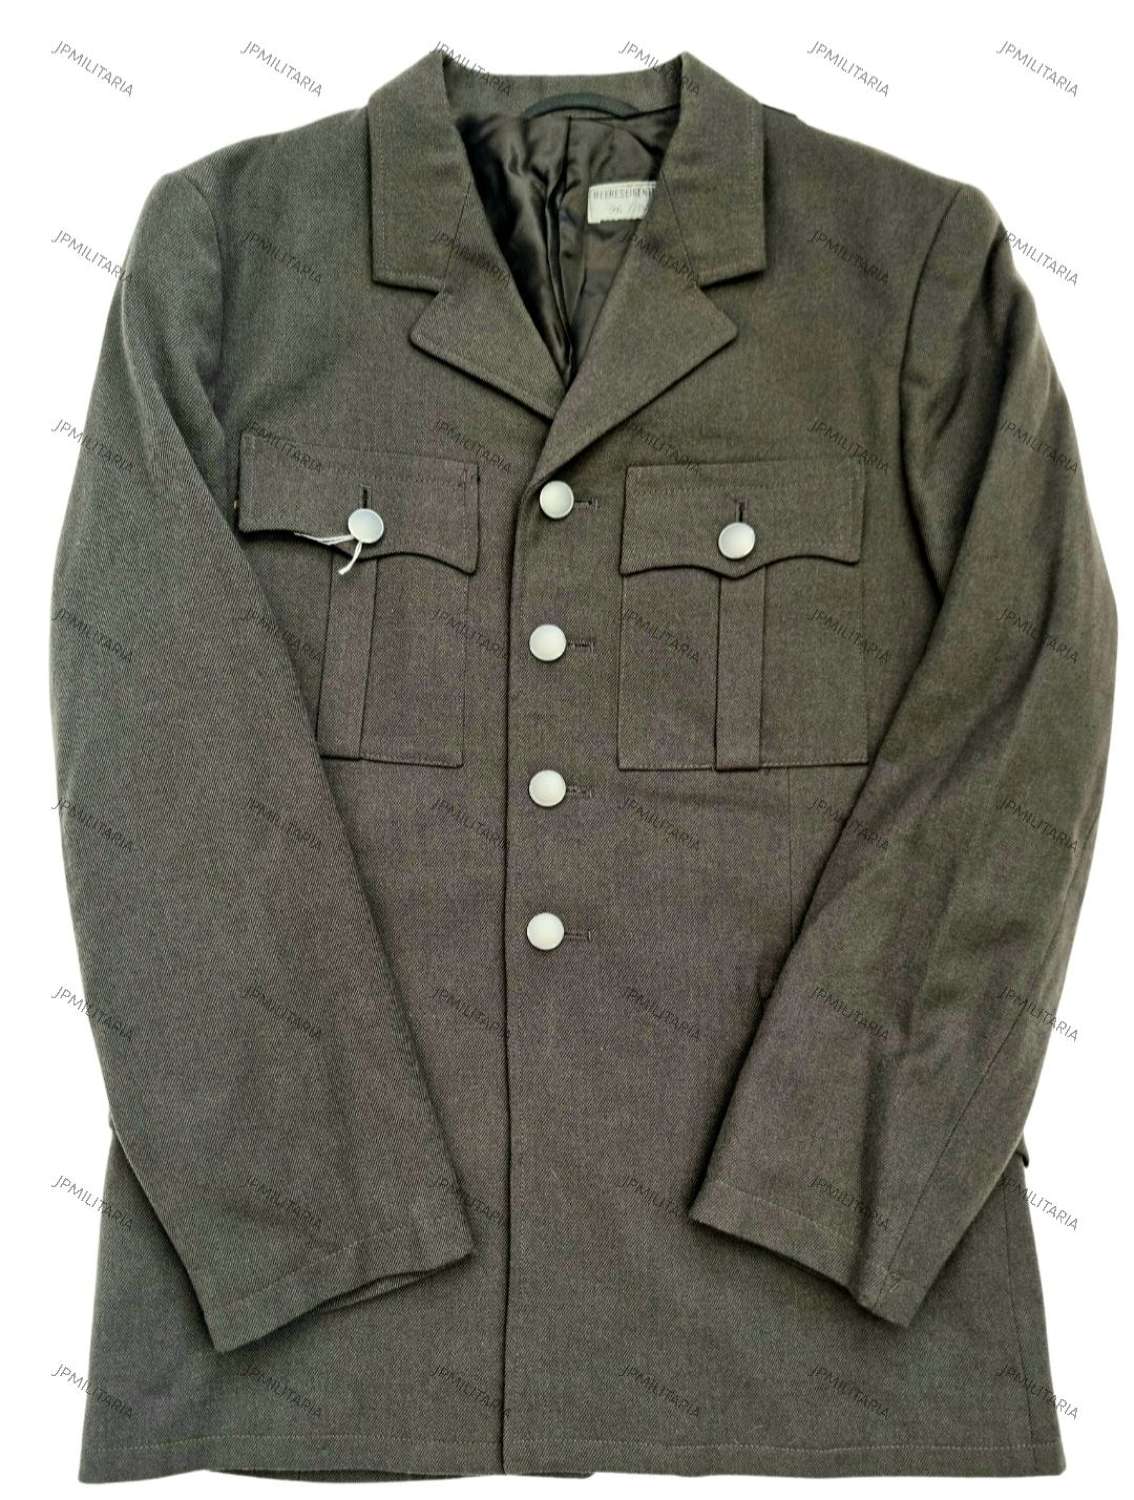 Austrian Army jackets